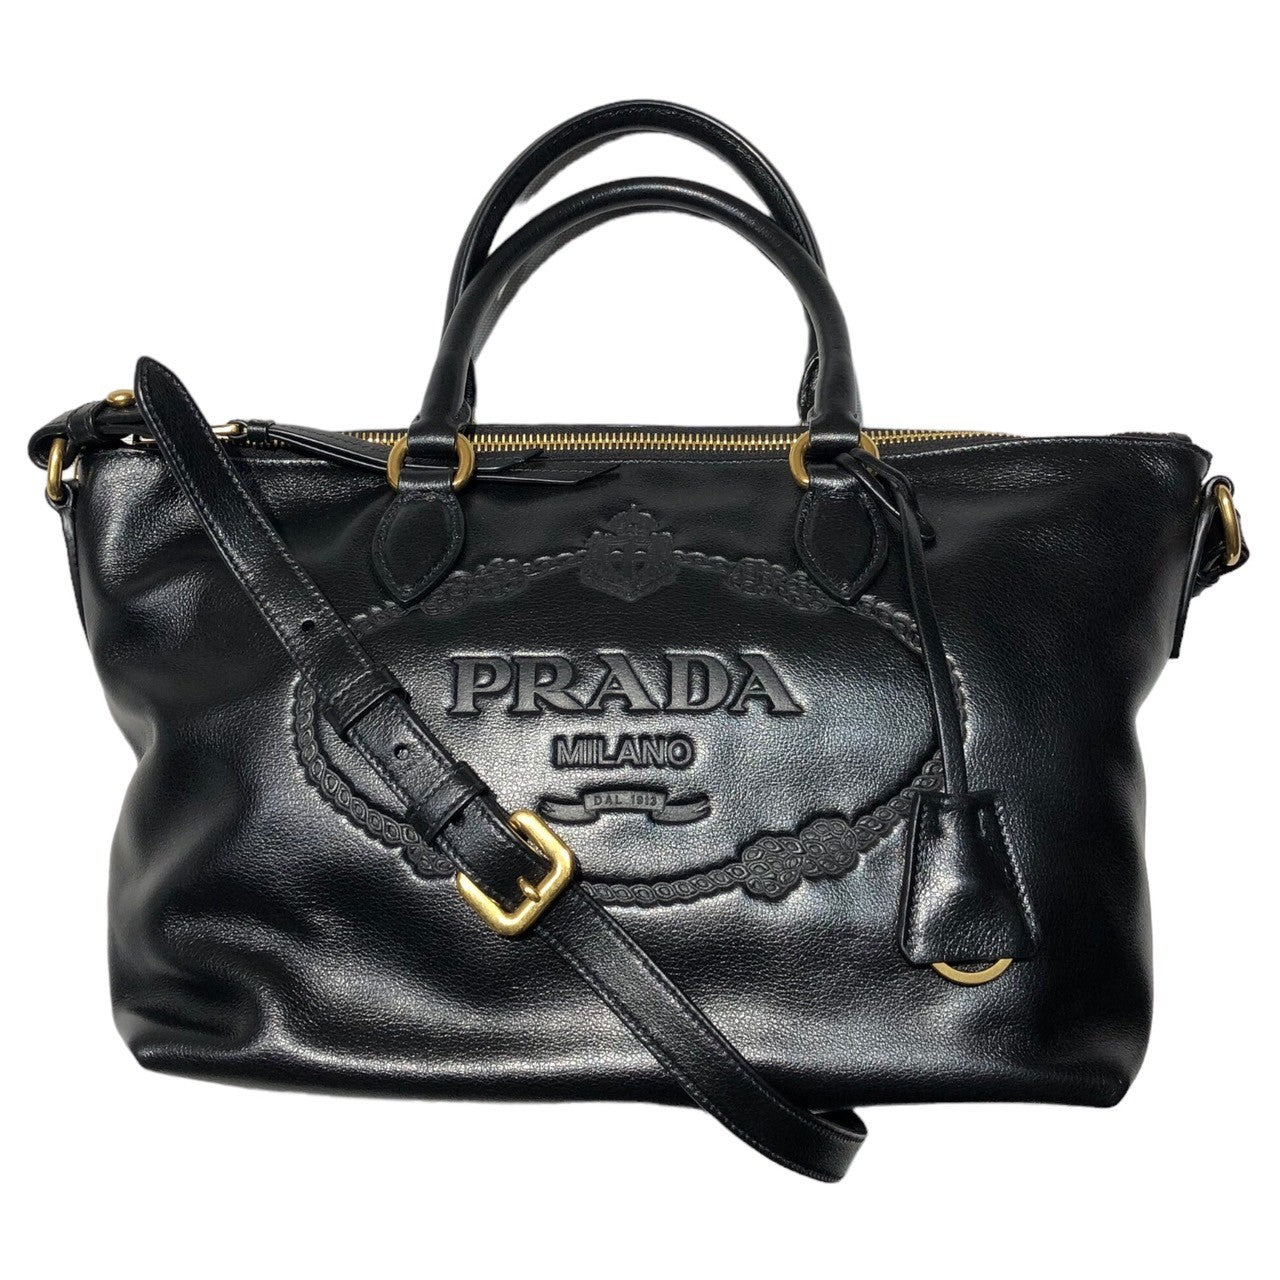 PRADA(プラダ) Embossed logo calf leather 2WAY shoulder bag エンボスロゴ カーフレザー 2WAY ショルダーバッグ 1BA104 ブラック ギャランティカード付属 ロゴ